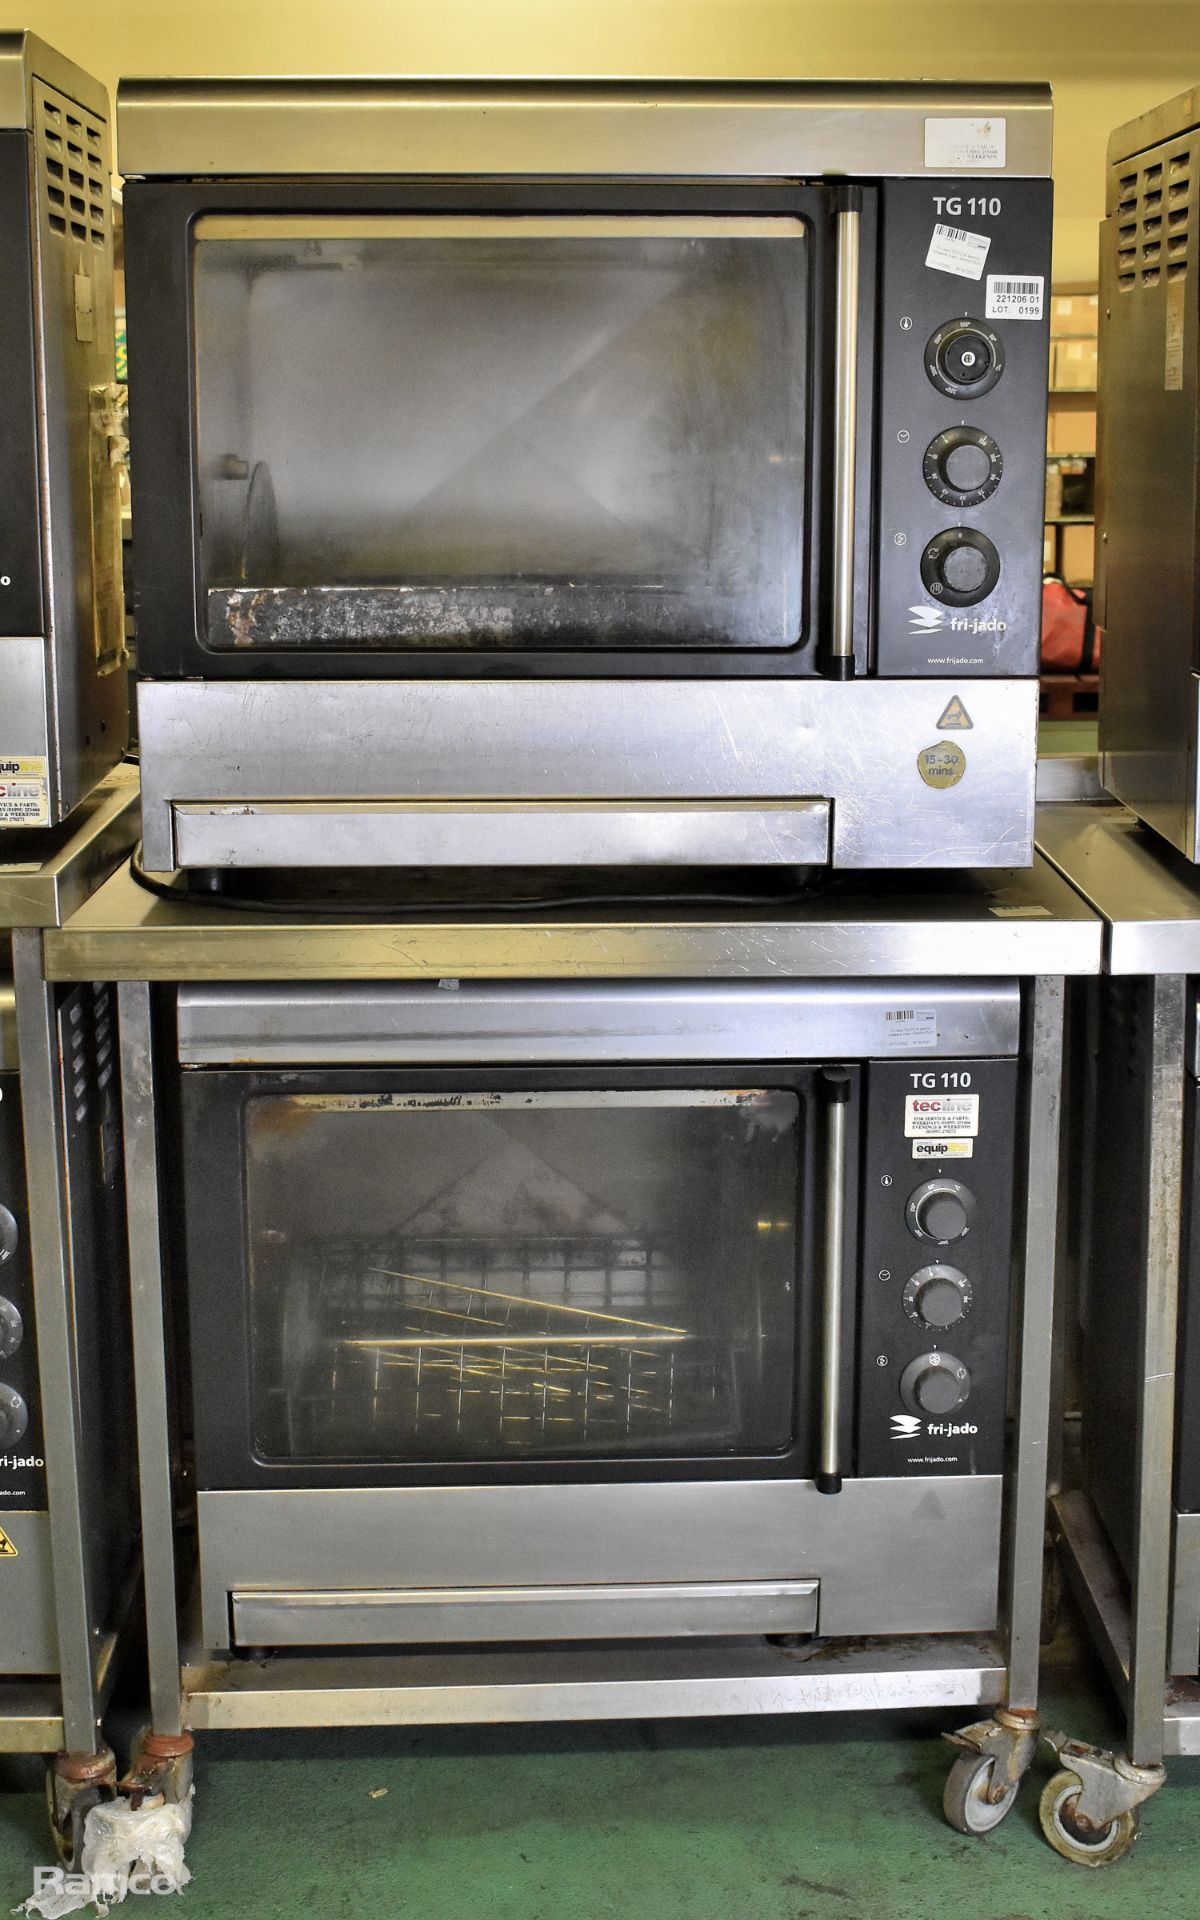 2x Fri-Jado TG110-M electric rotisserie ovens - 84 x 55 x 75cm, Stainless steel trolley